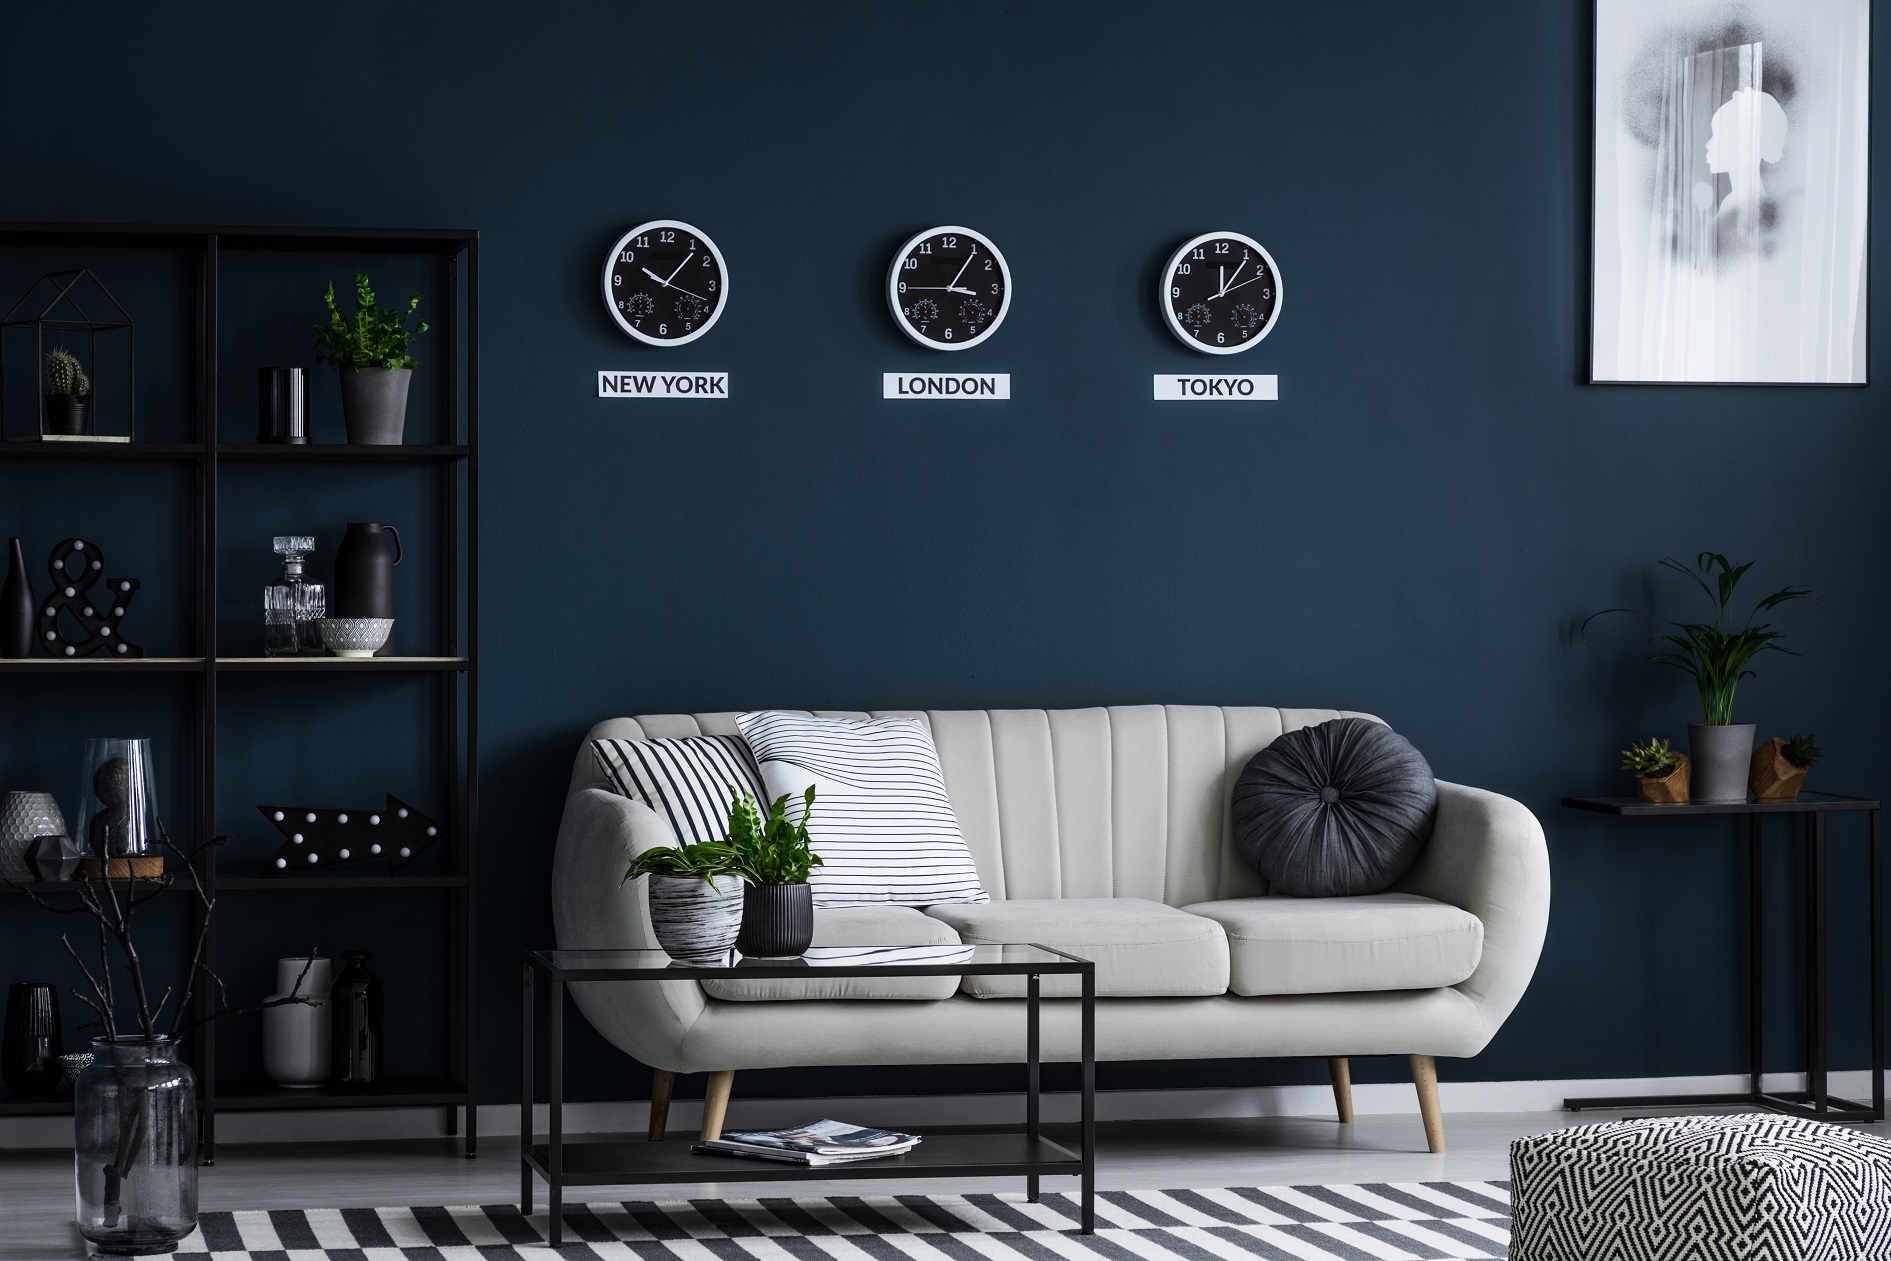 Sleek Living Room with a bold color choice